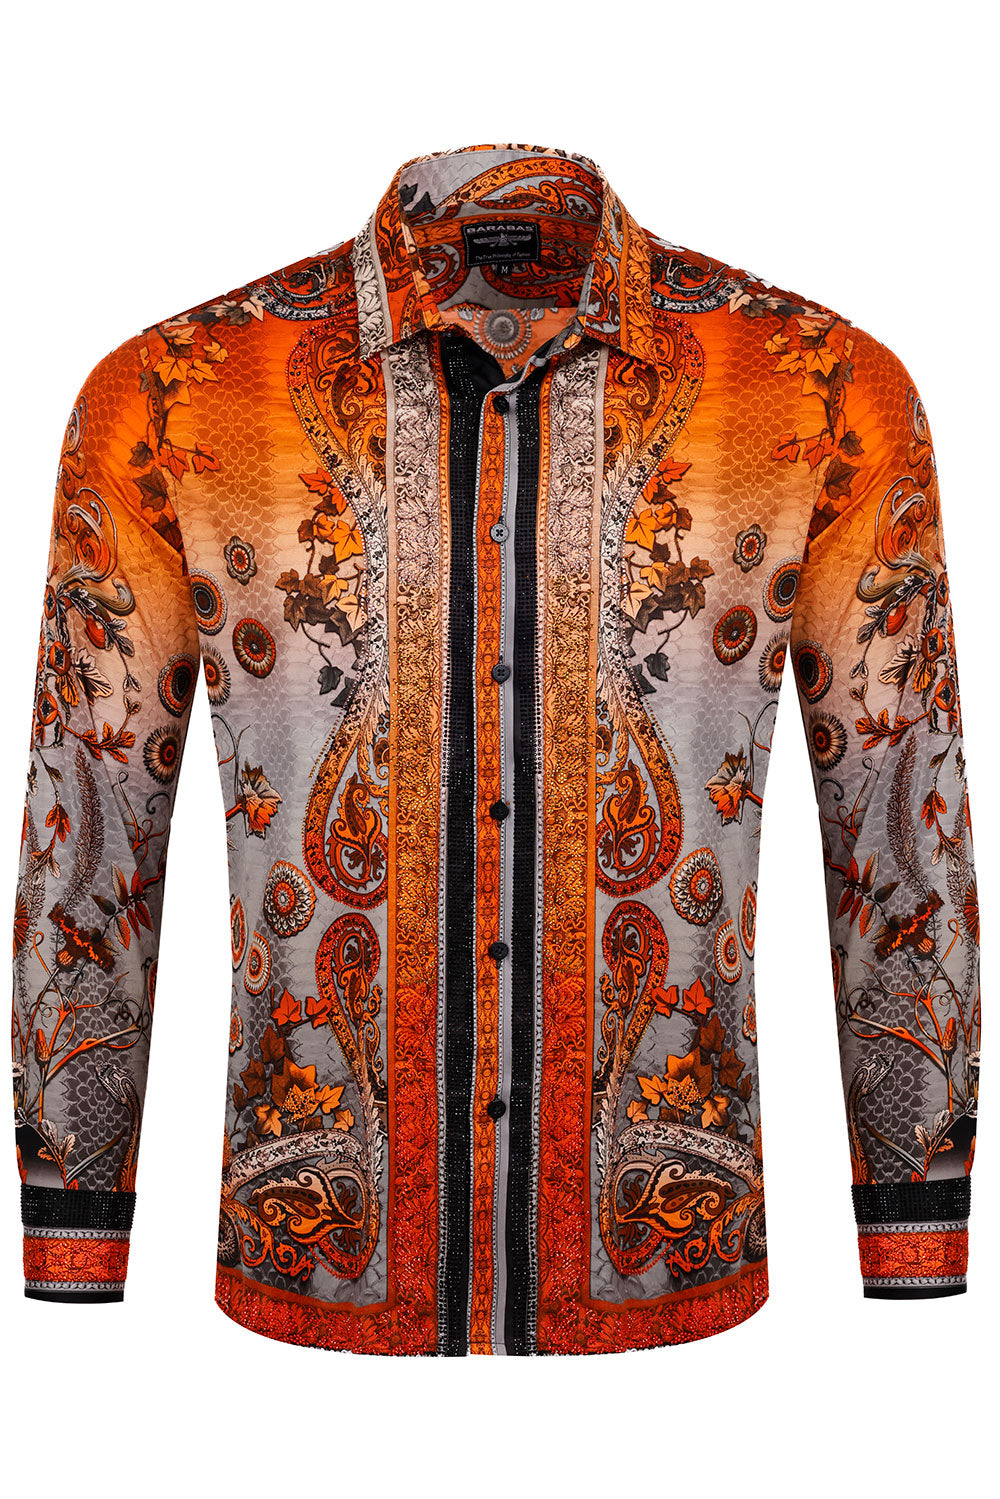 BARABAS Men's Rhinestone Floral Snake Skin Long Sleeve Shirts 3SPR408 Orange